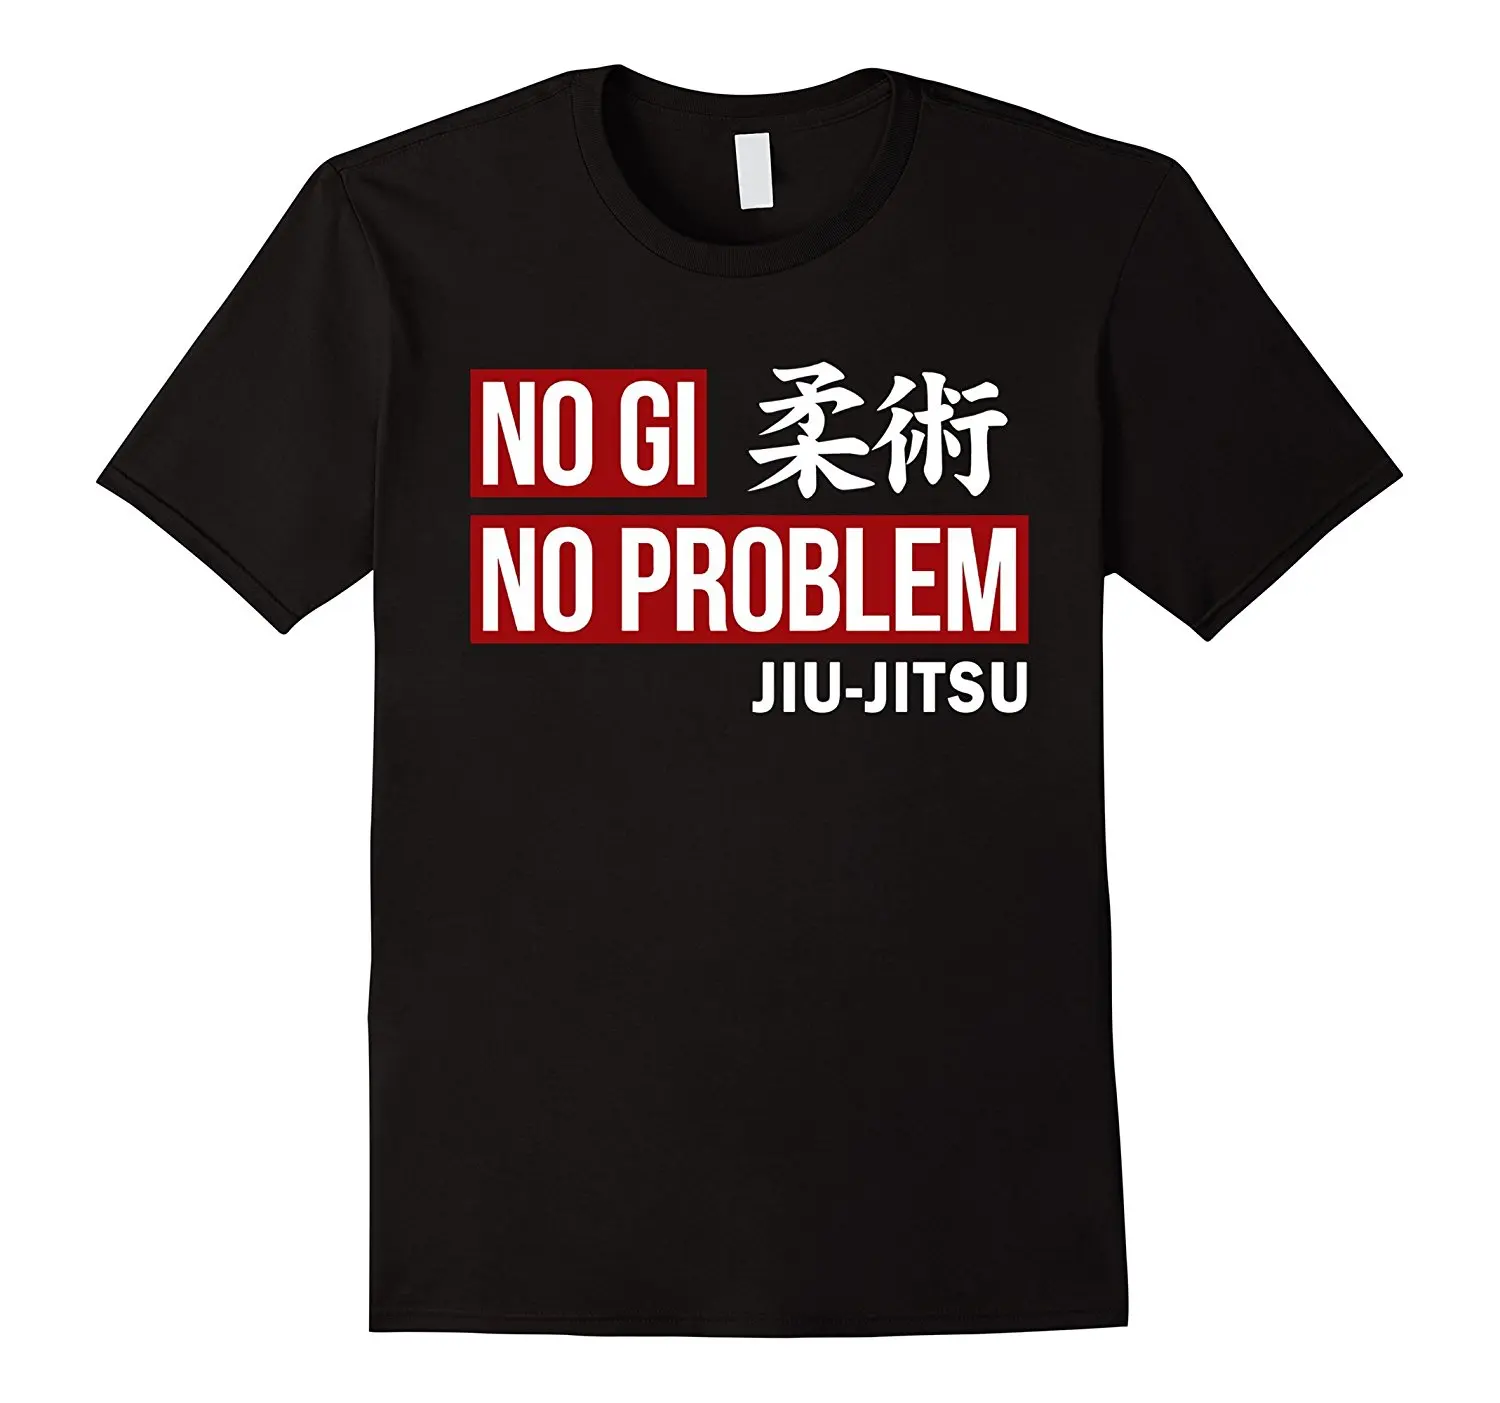 

Men Clothing Jiu Jitsu T Shirt No Gi No Problem Jiu Jitsu Train Summer Comfortable Shirt Casual Fashion Streetwear Camisetas